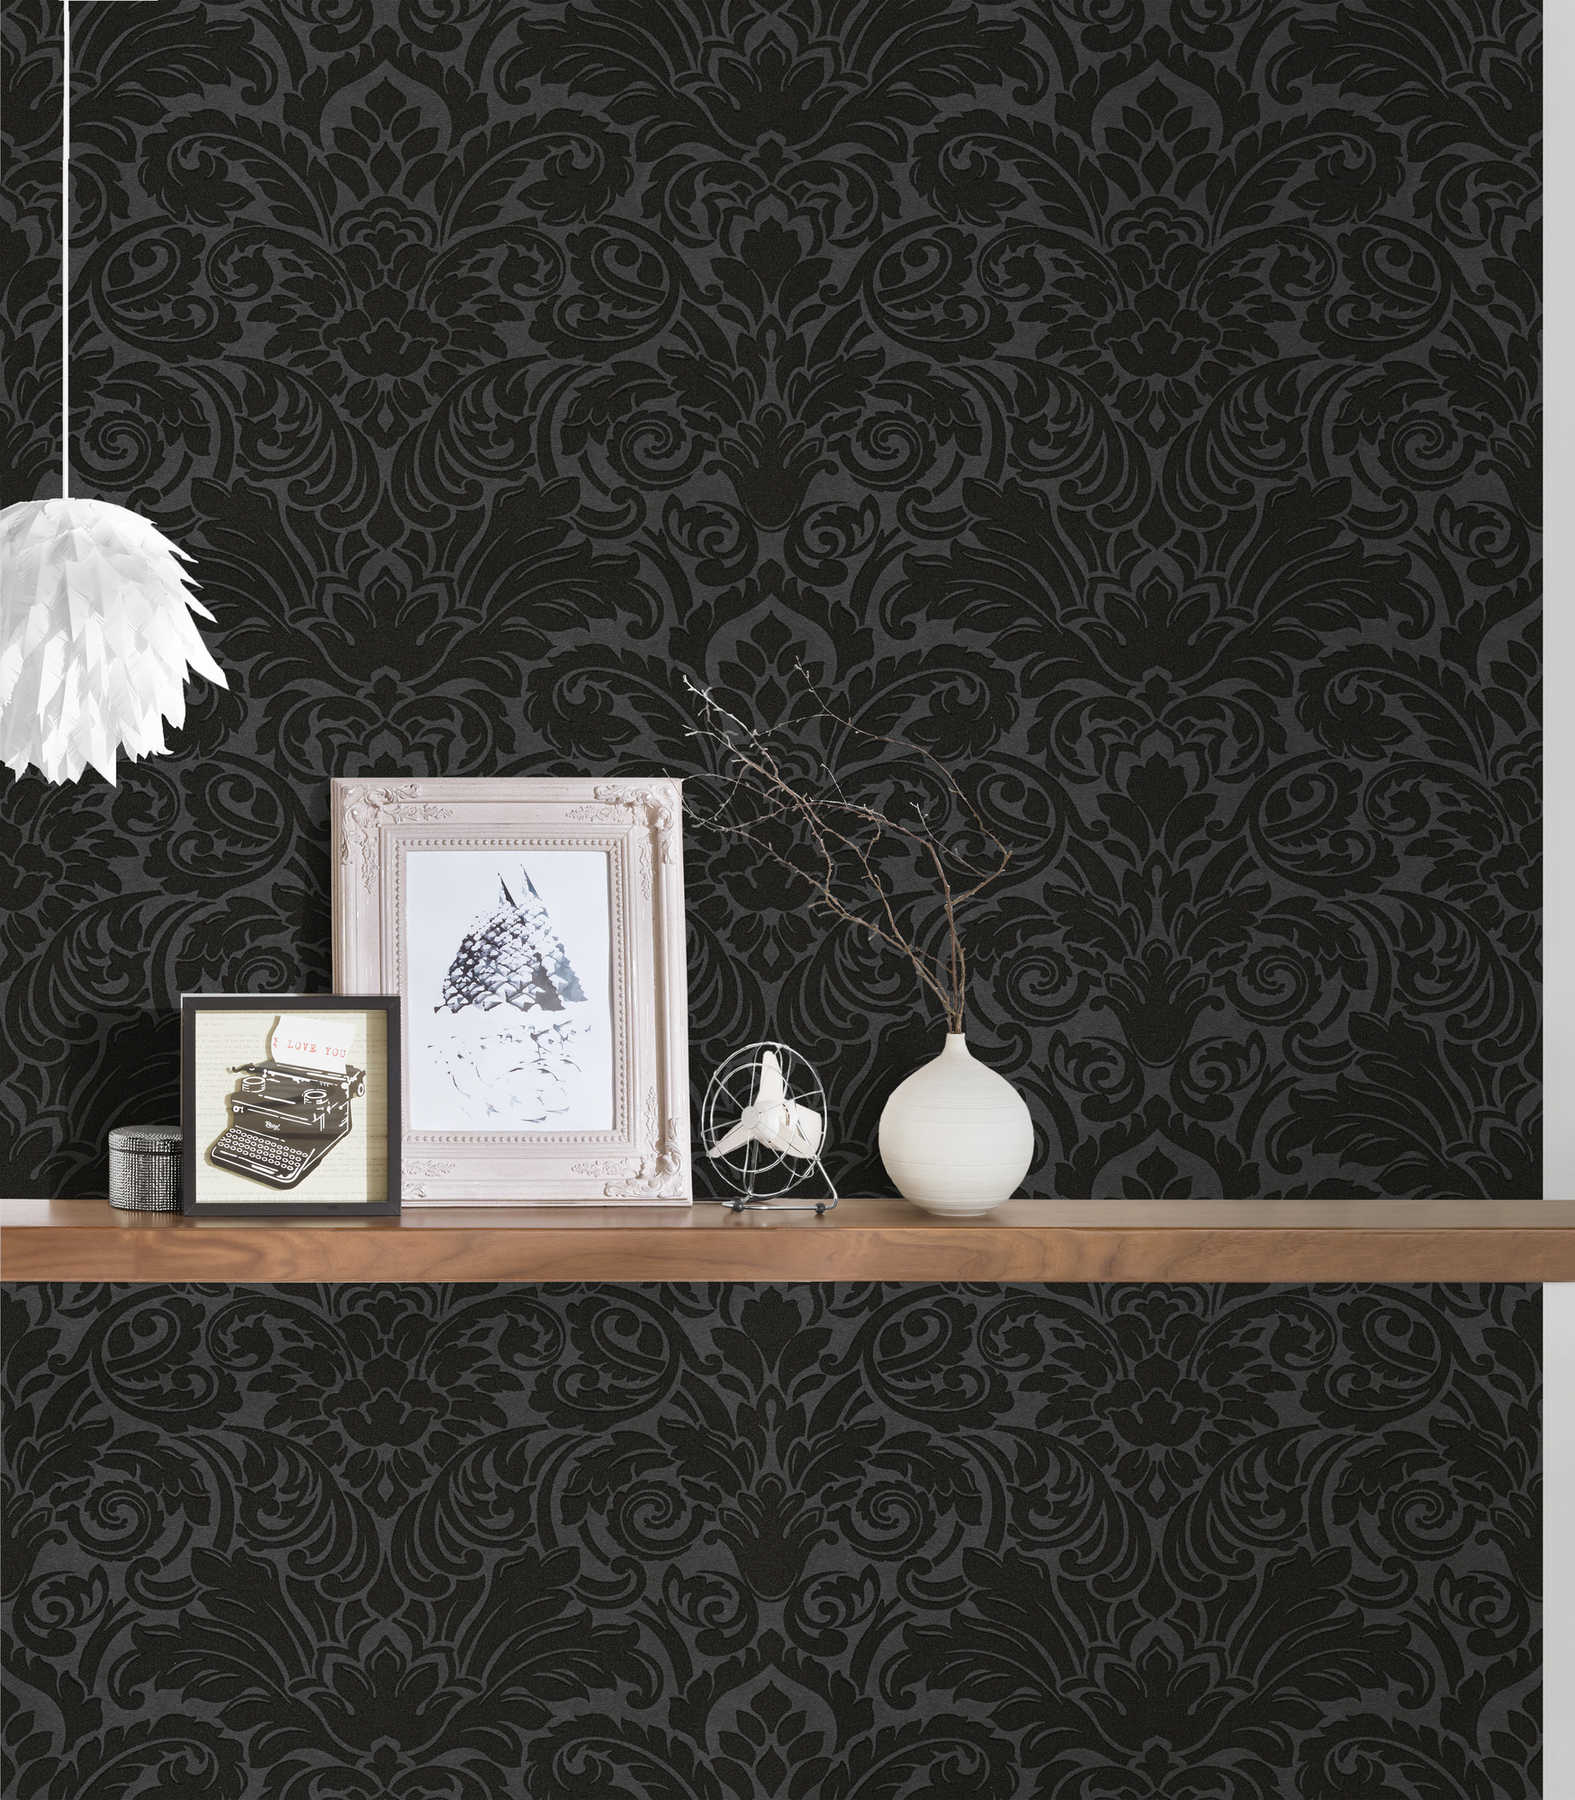             Ornament wallpaper metallic effect & floral design - silver, black
        